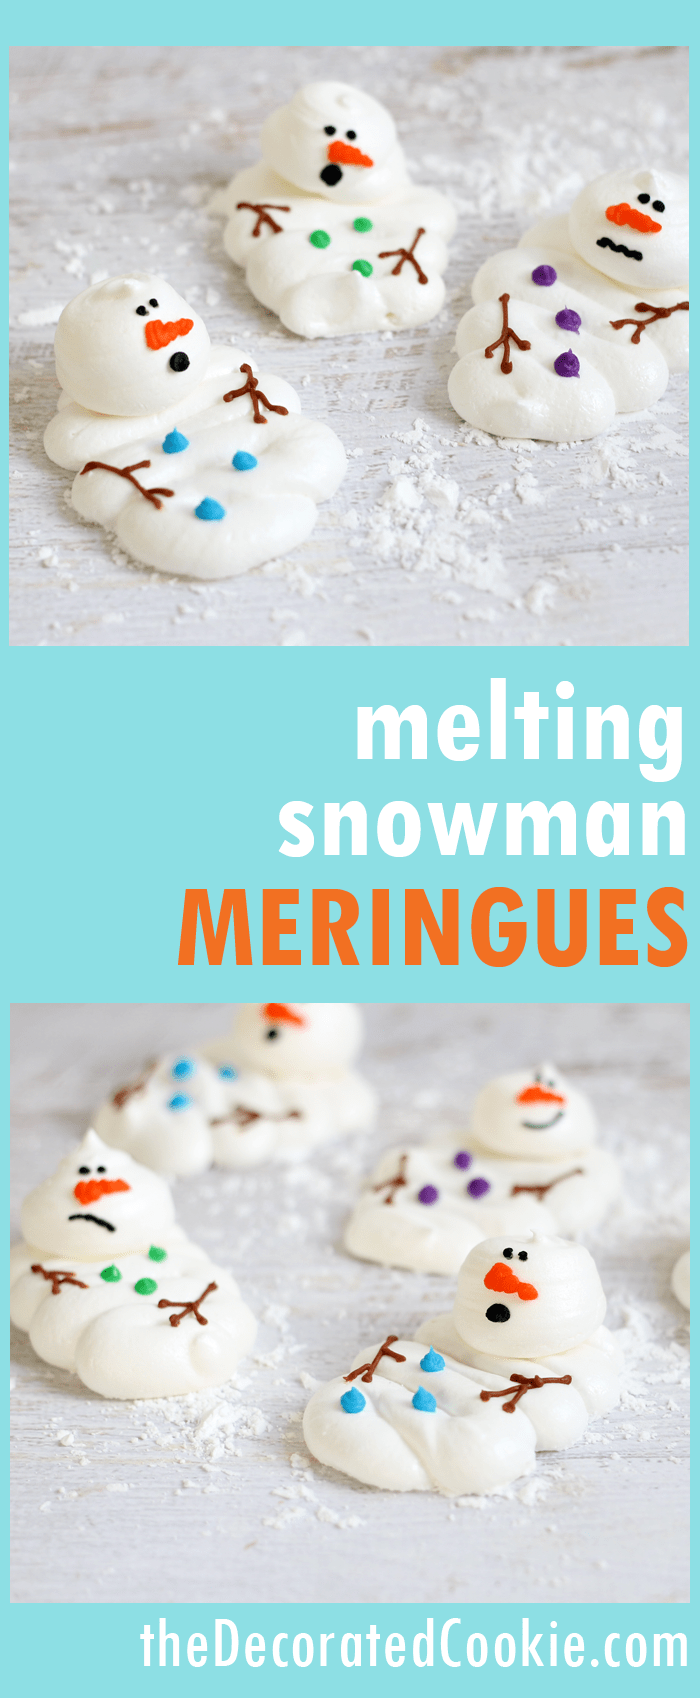 melting snowman meringues